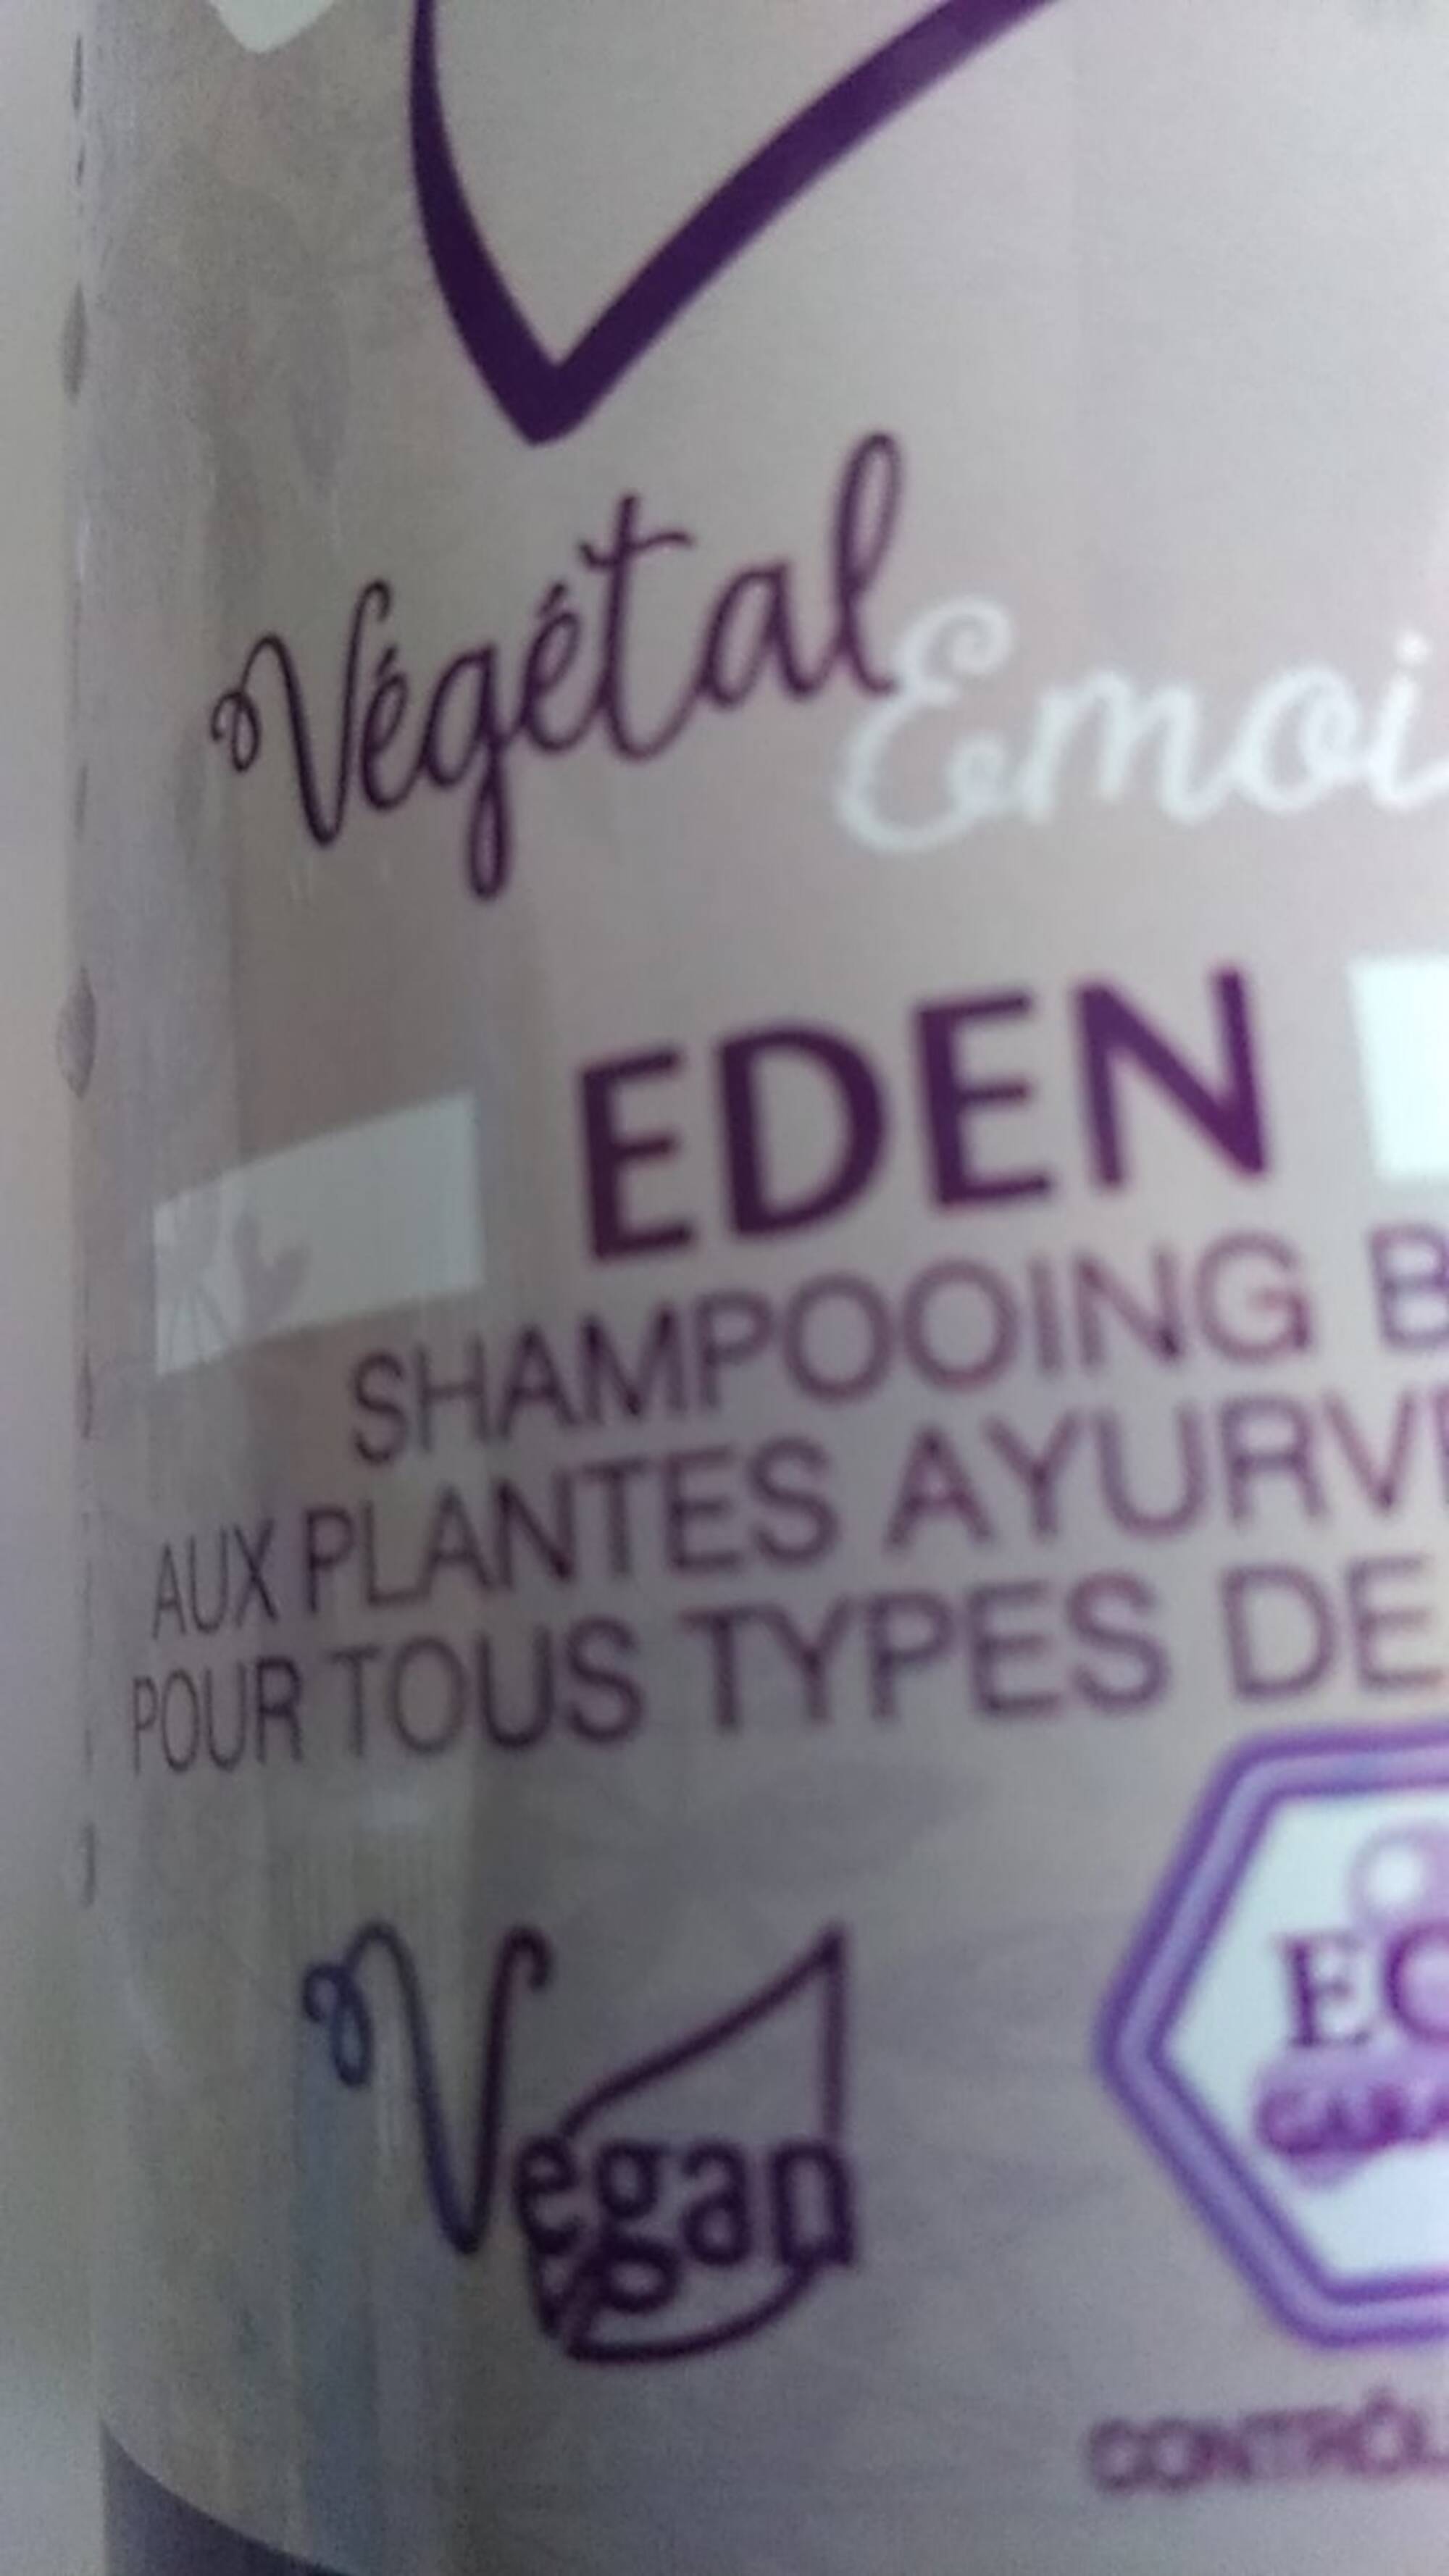 VÉGÉTAL'EMOI - Eden - Shampooing Bio